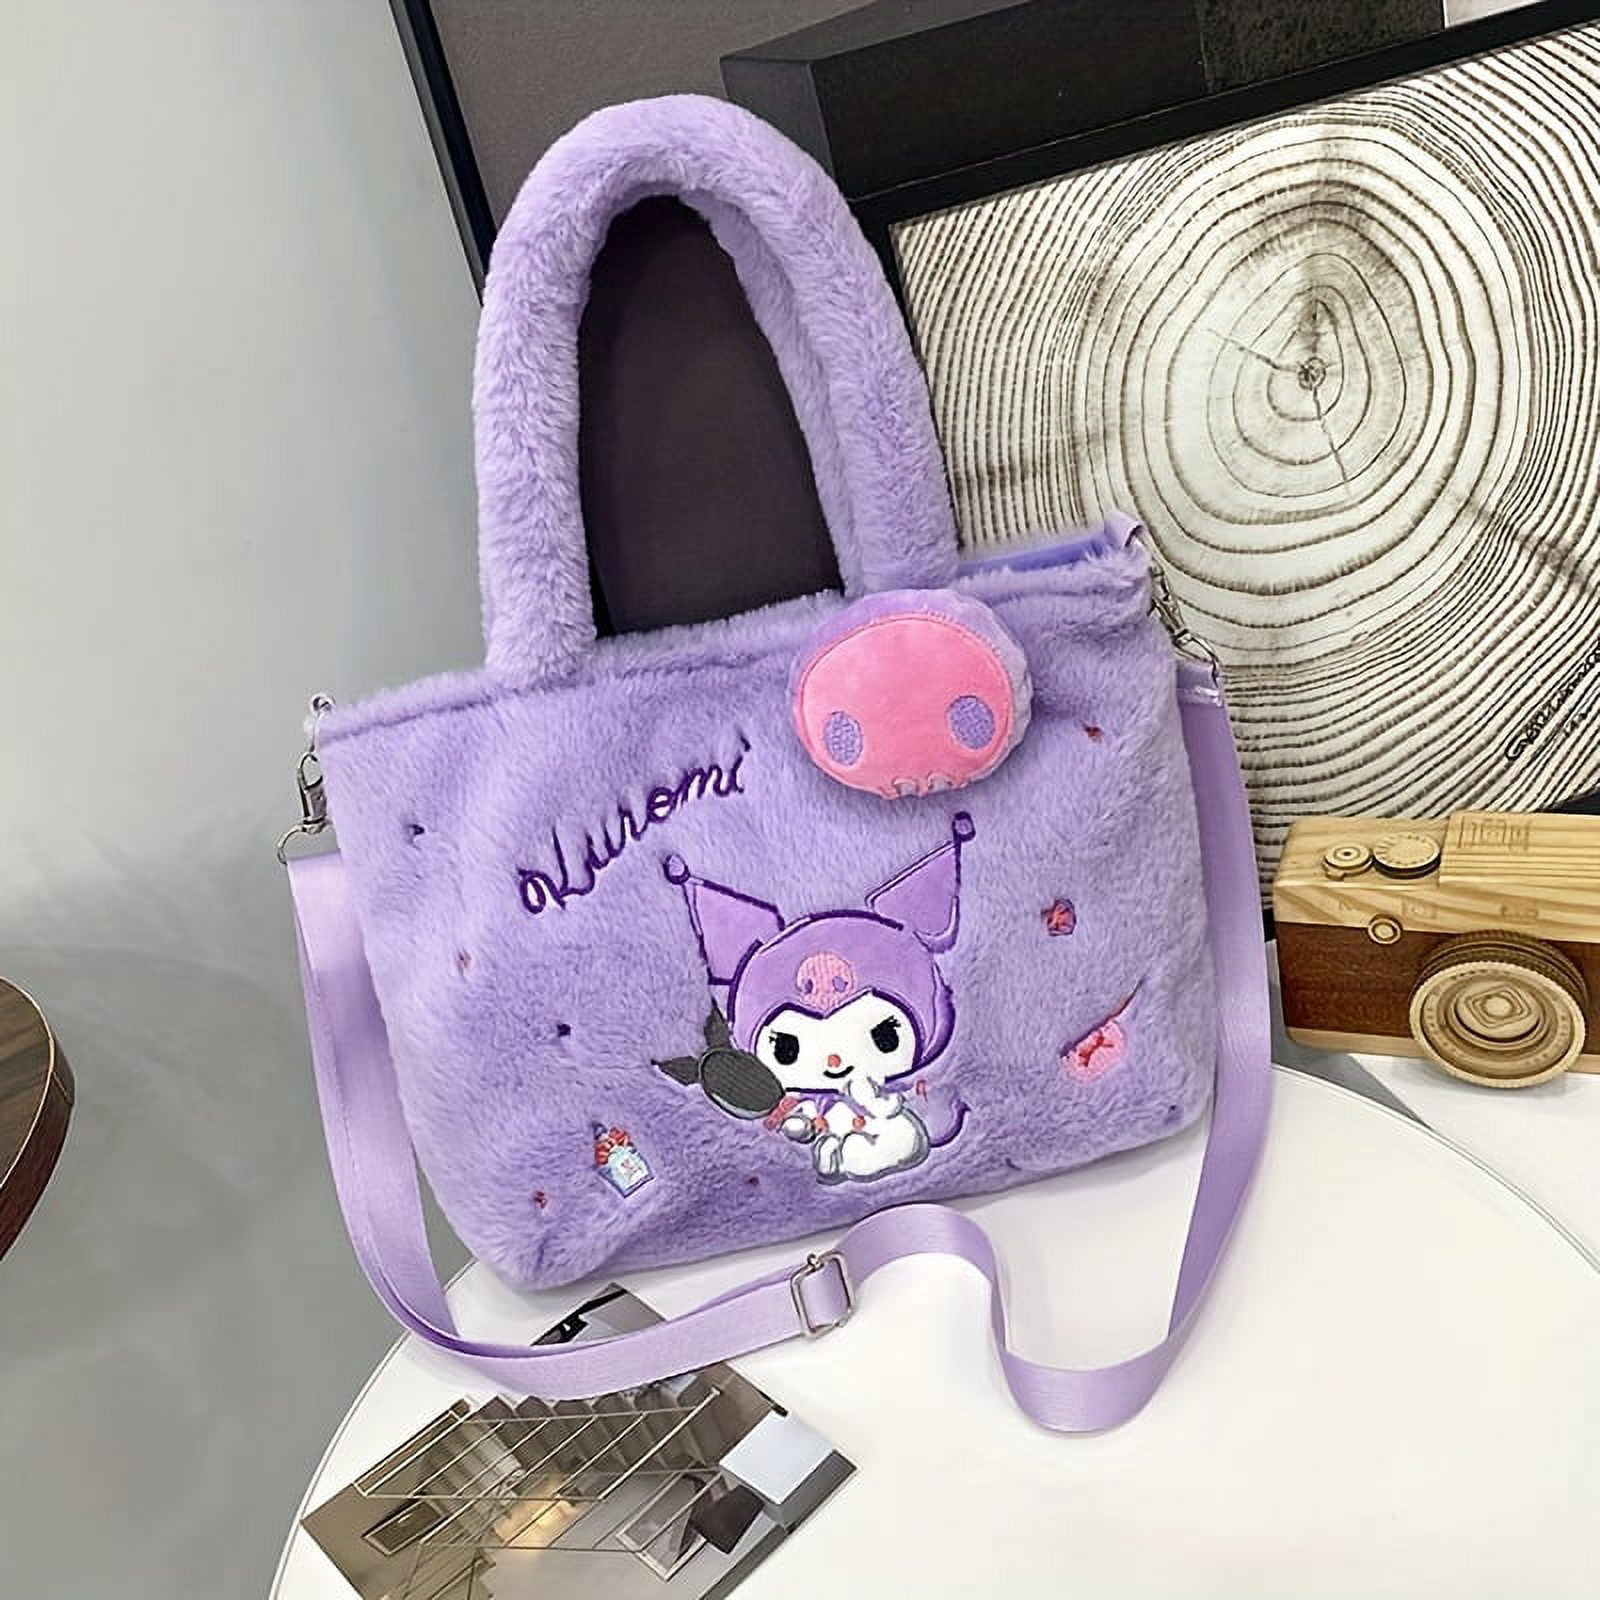 Handbags | Miniso Leather Bag | Freeup